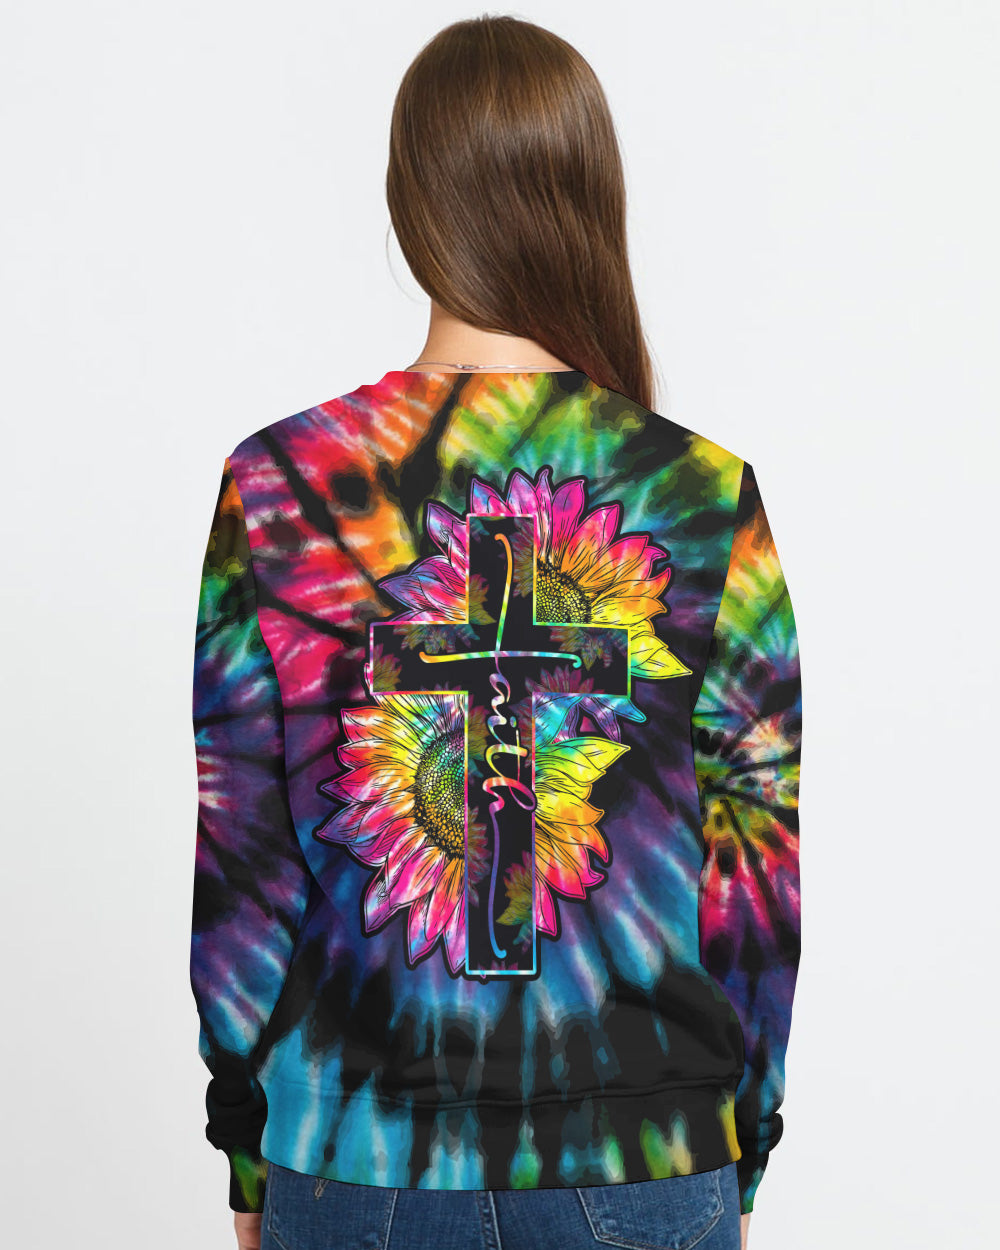 Sunflower Cross Full Tie Dye Faith Women's Christian Sweatshirt